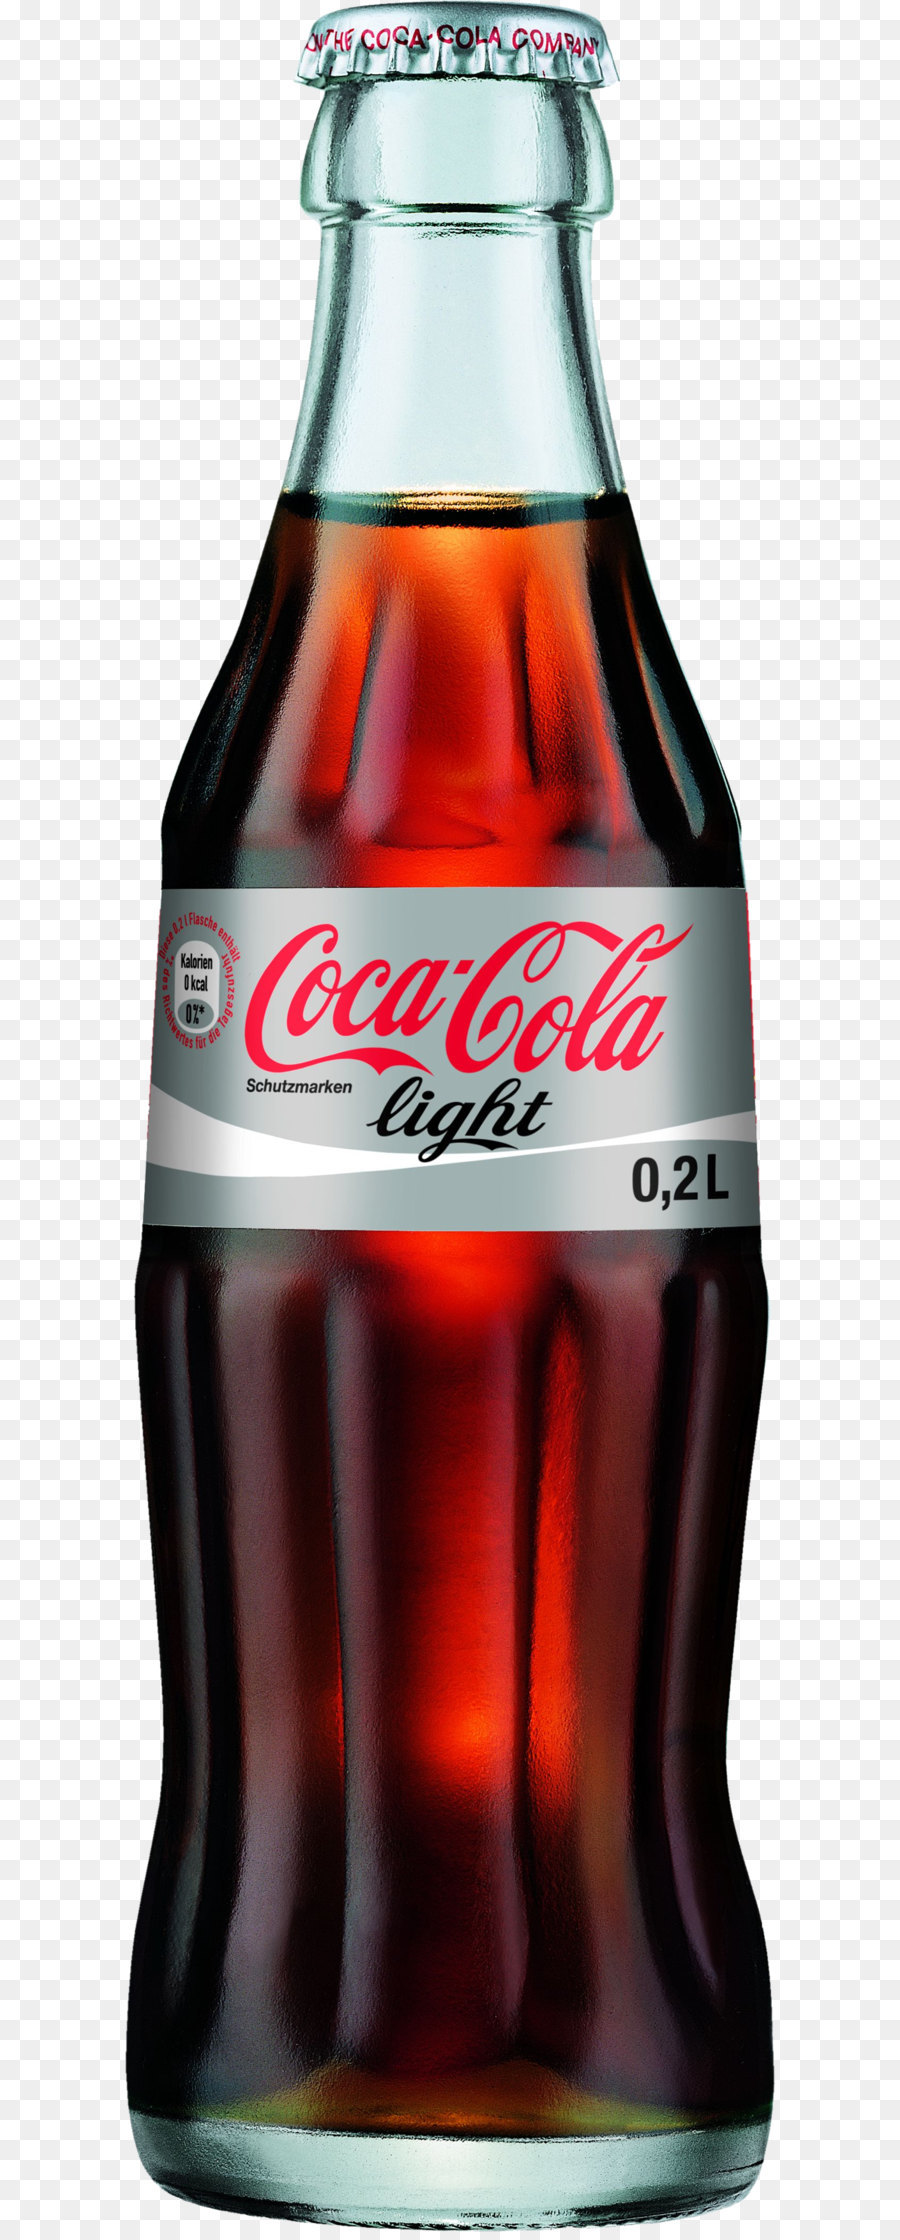 Coca-Cola Soft drink Diet Coke Bottle - Coca cola bottle PNG image png download - 1018*3496 - Free Transparent Coca Cola png Download.